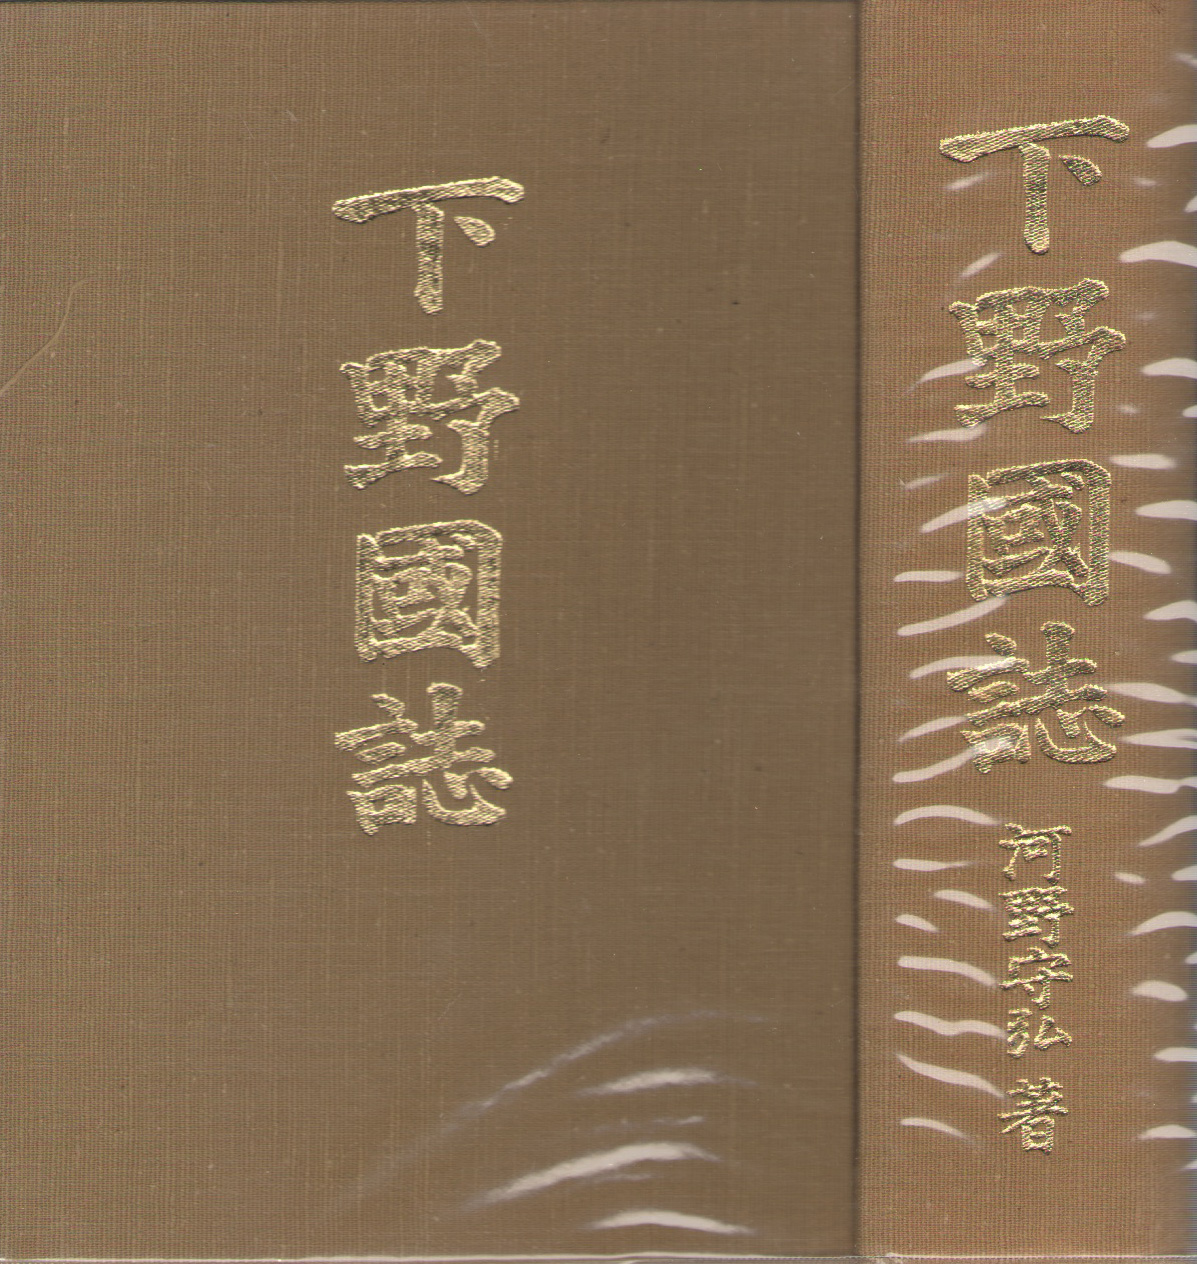 刀剣小町 書籍 Japanese sword books